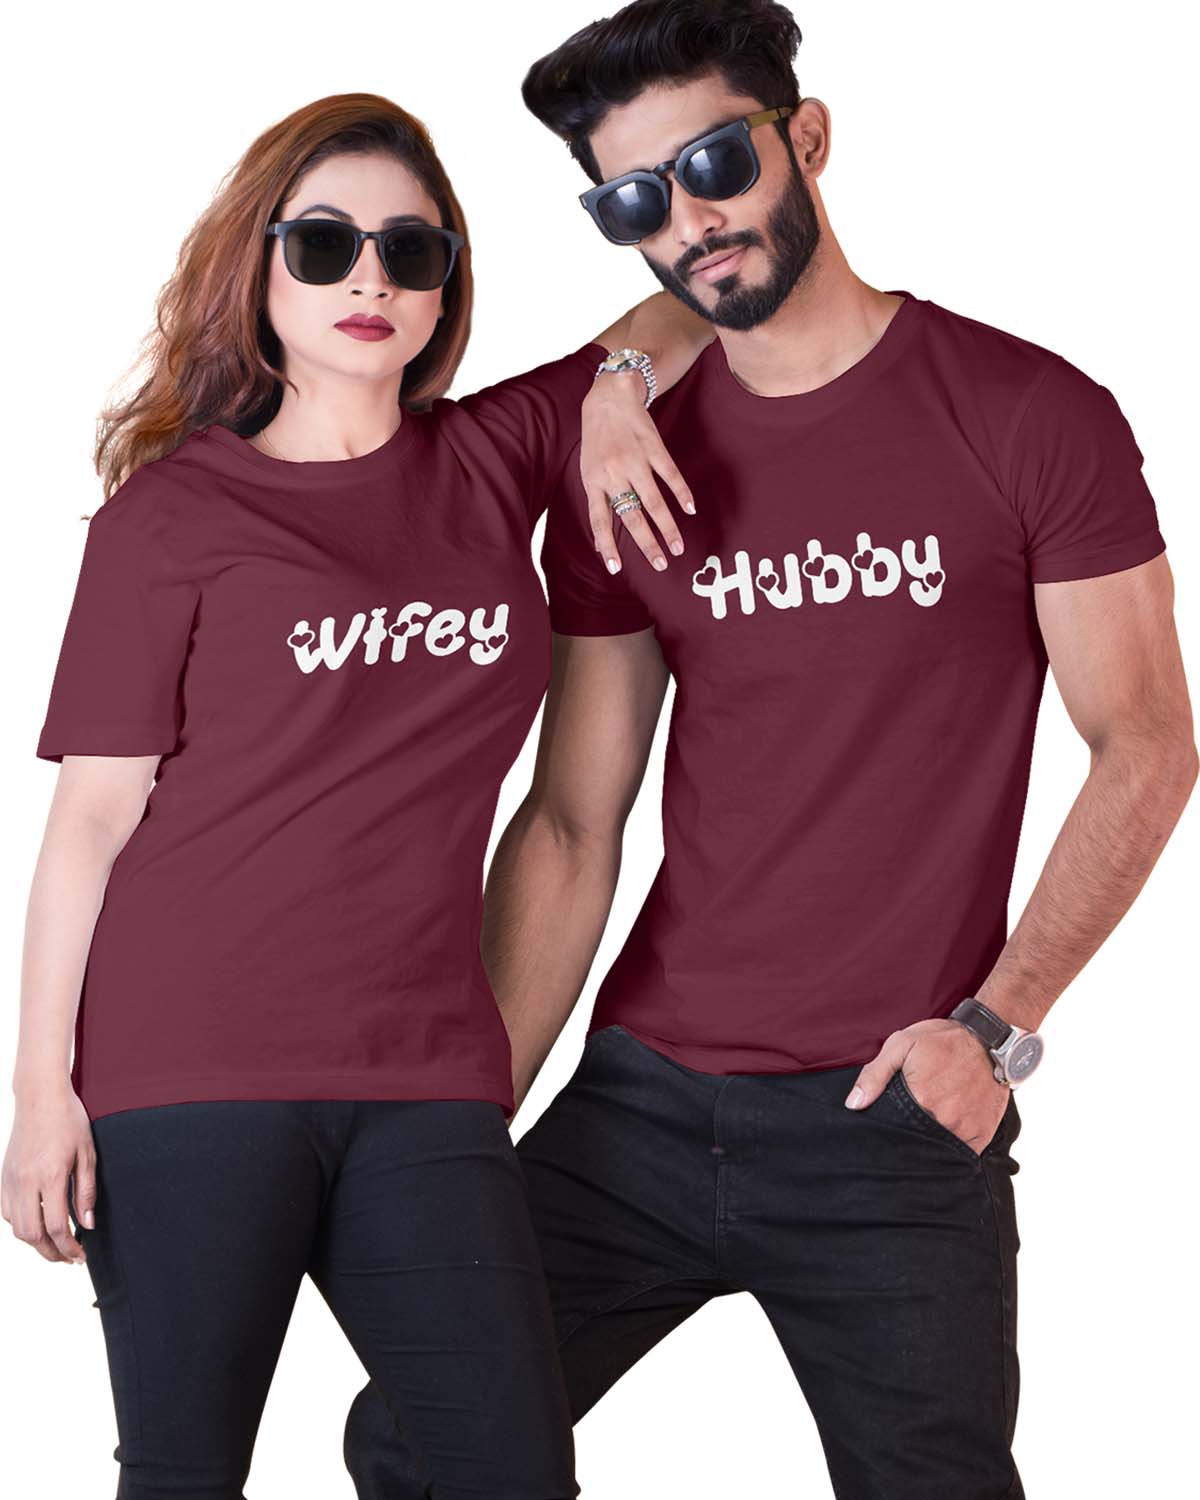 Wifey Hubby Couple T-Shirt